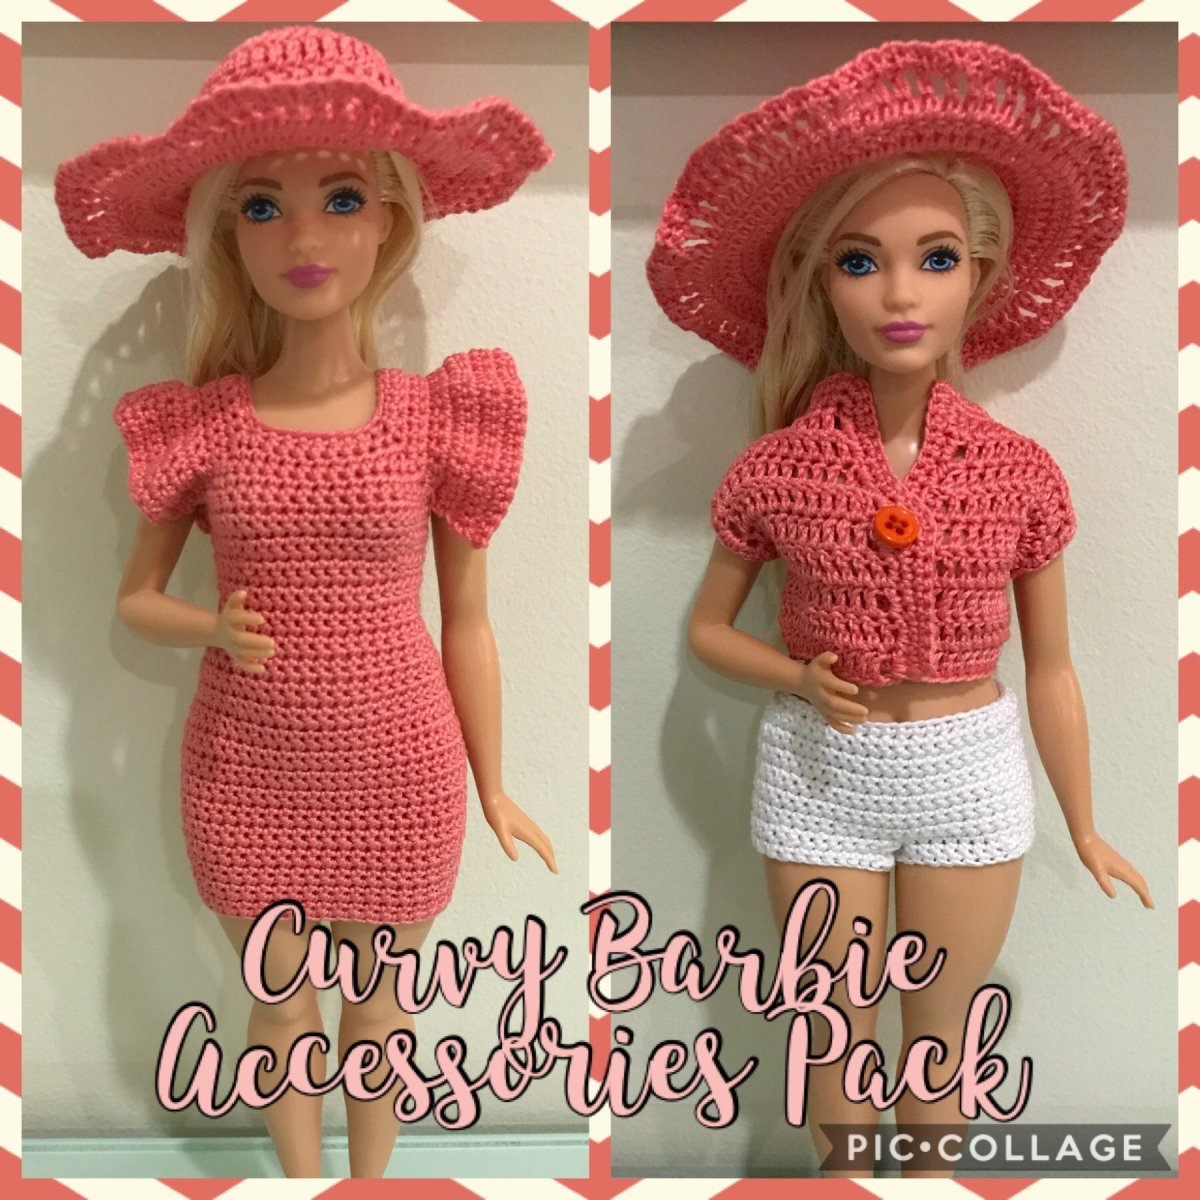 Curvy Barbie Accessories Pack (Free Crochet Pattern)